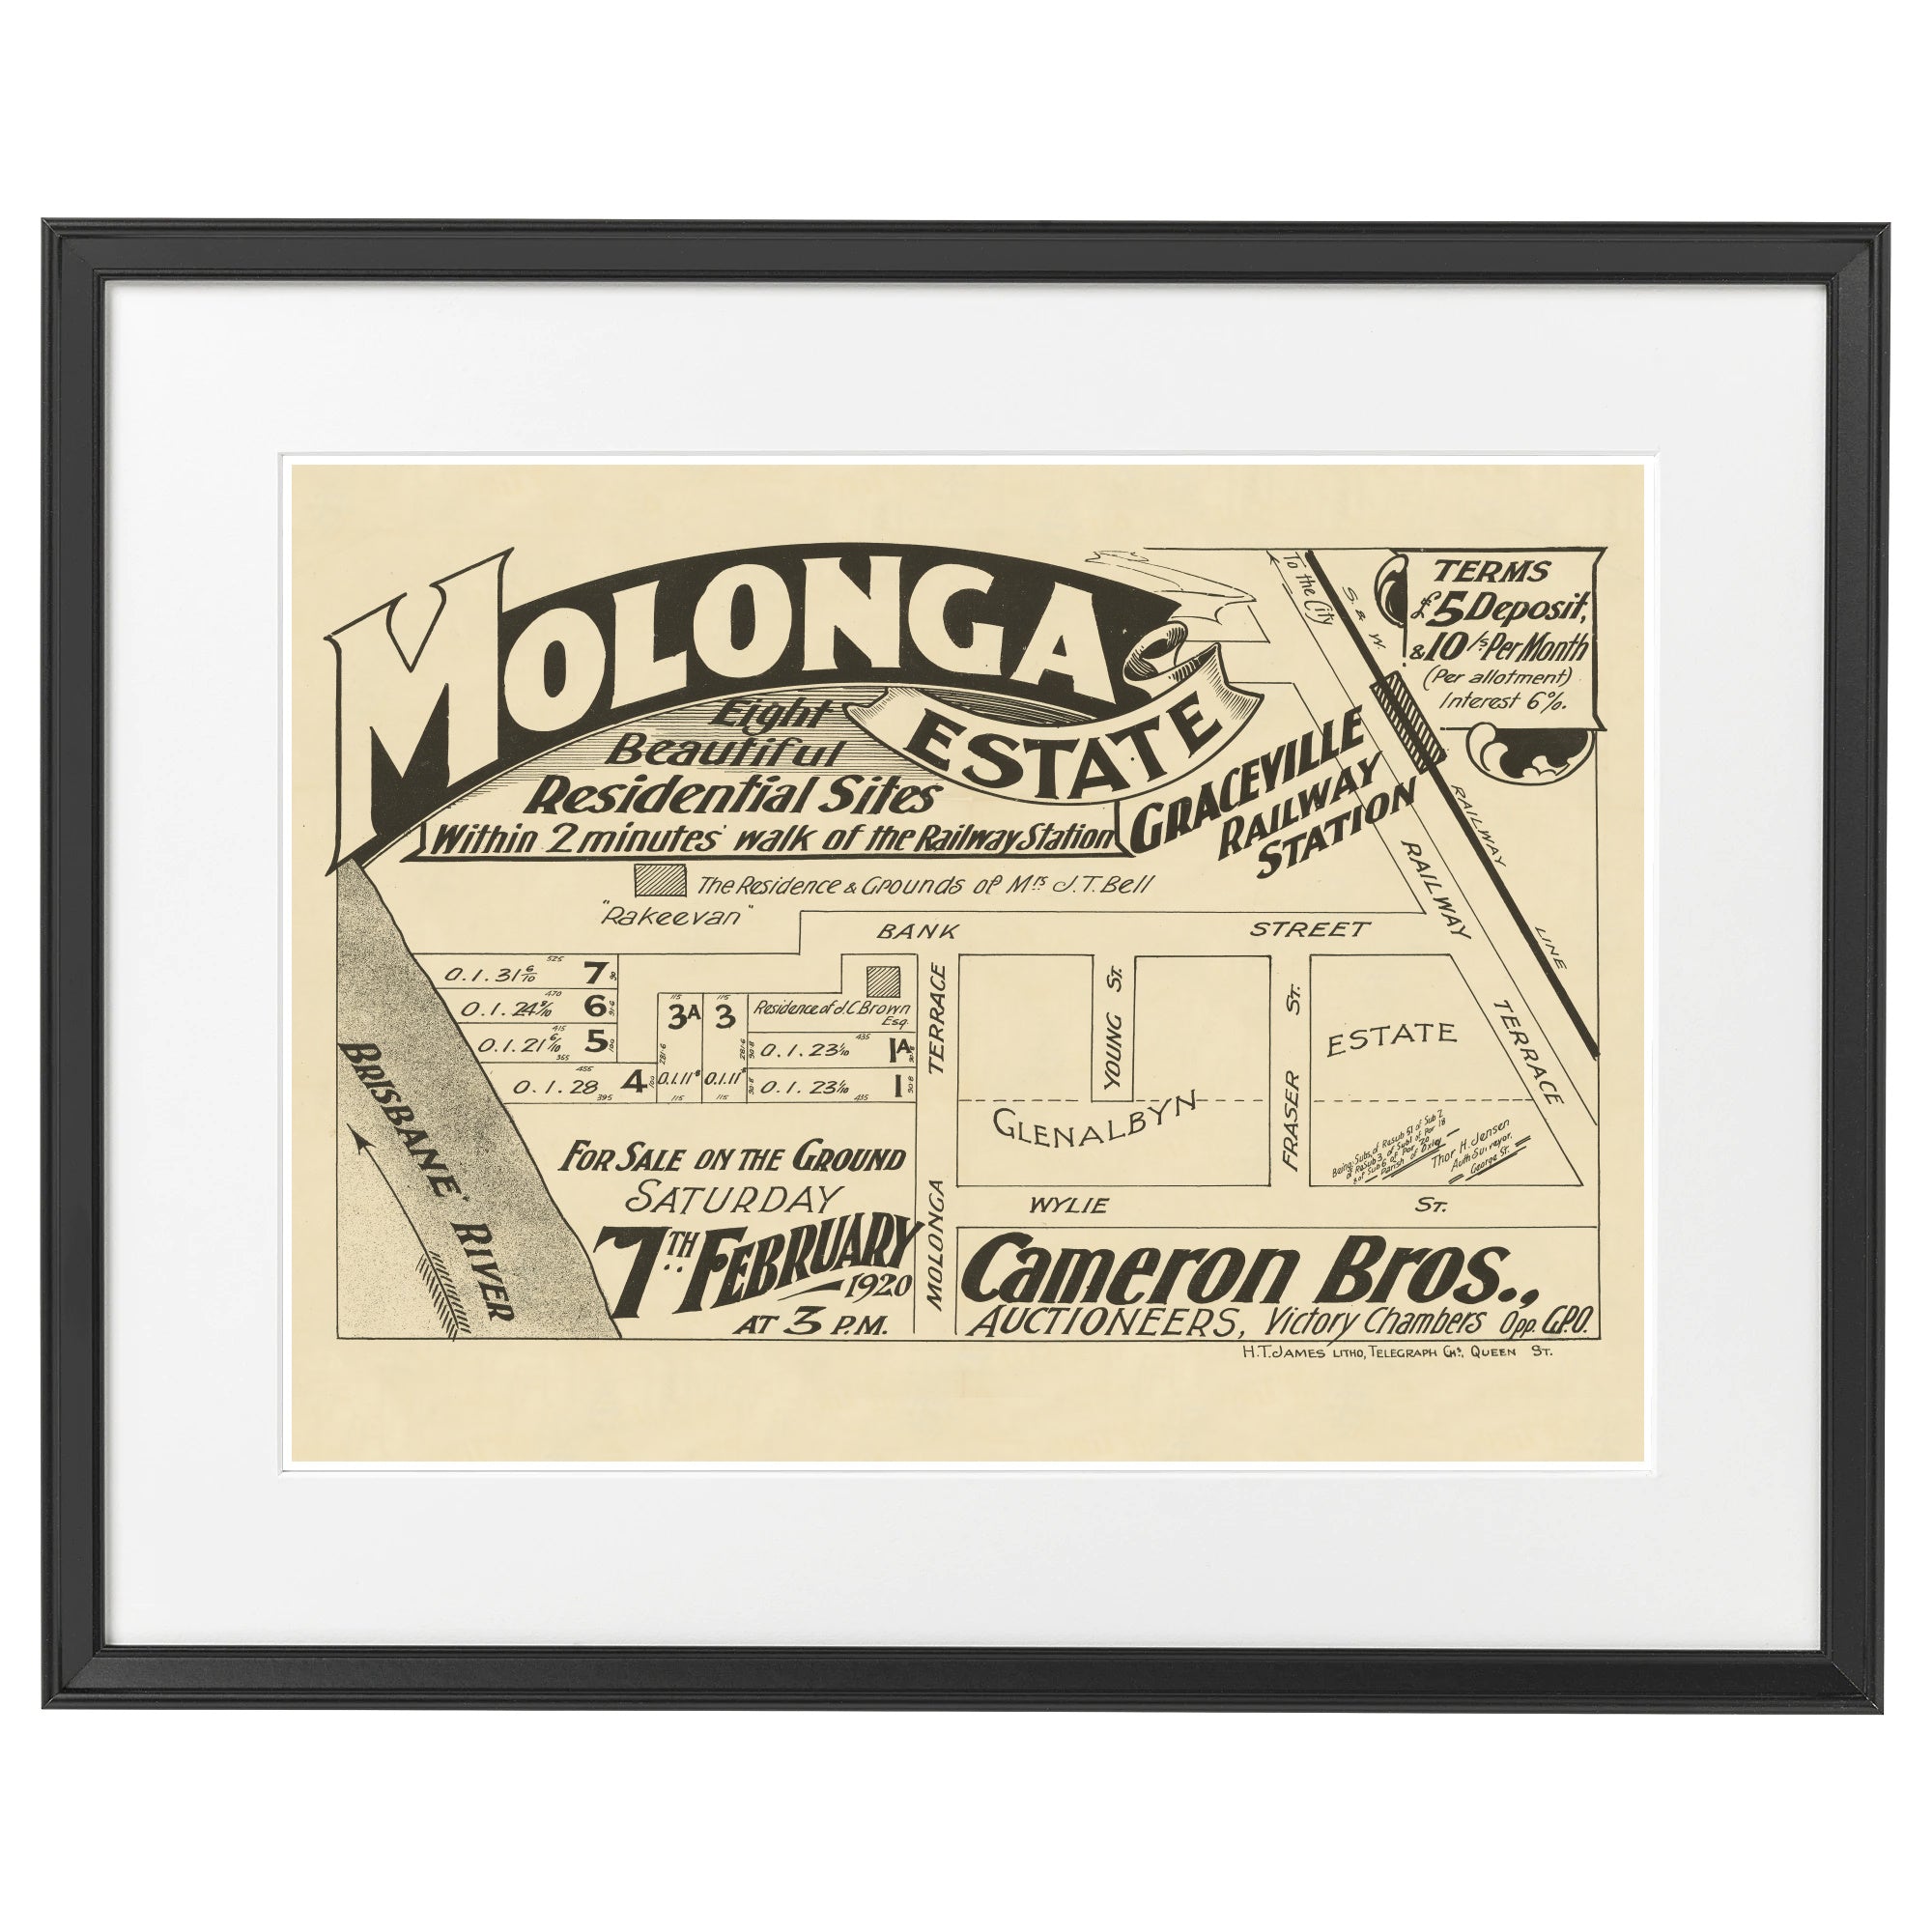 Molonga Estate - 100 years old today